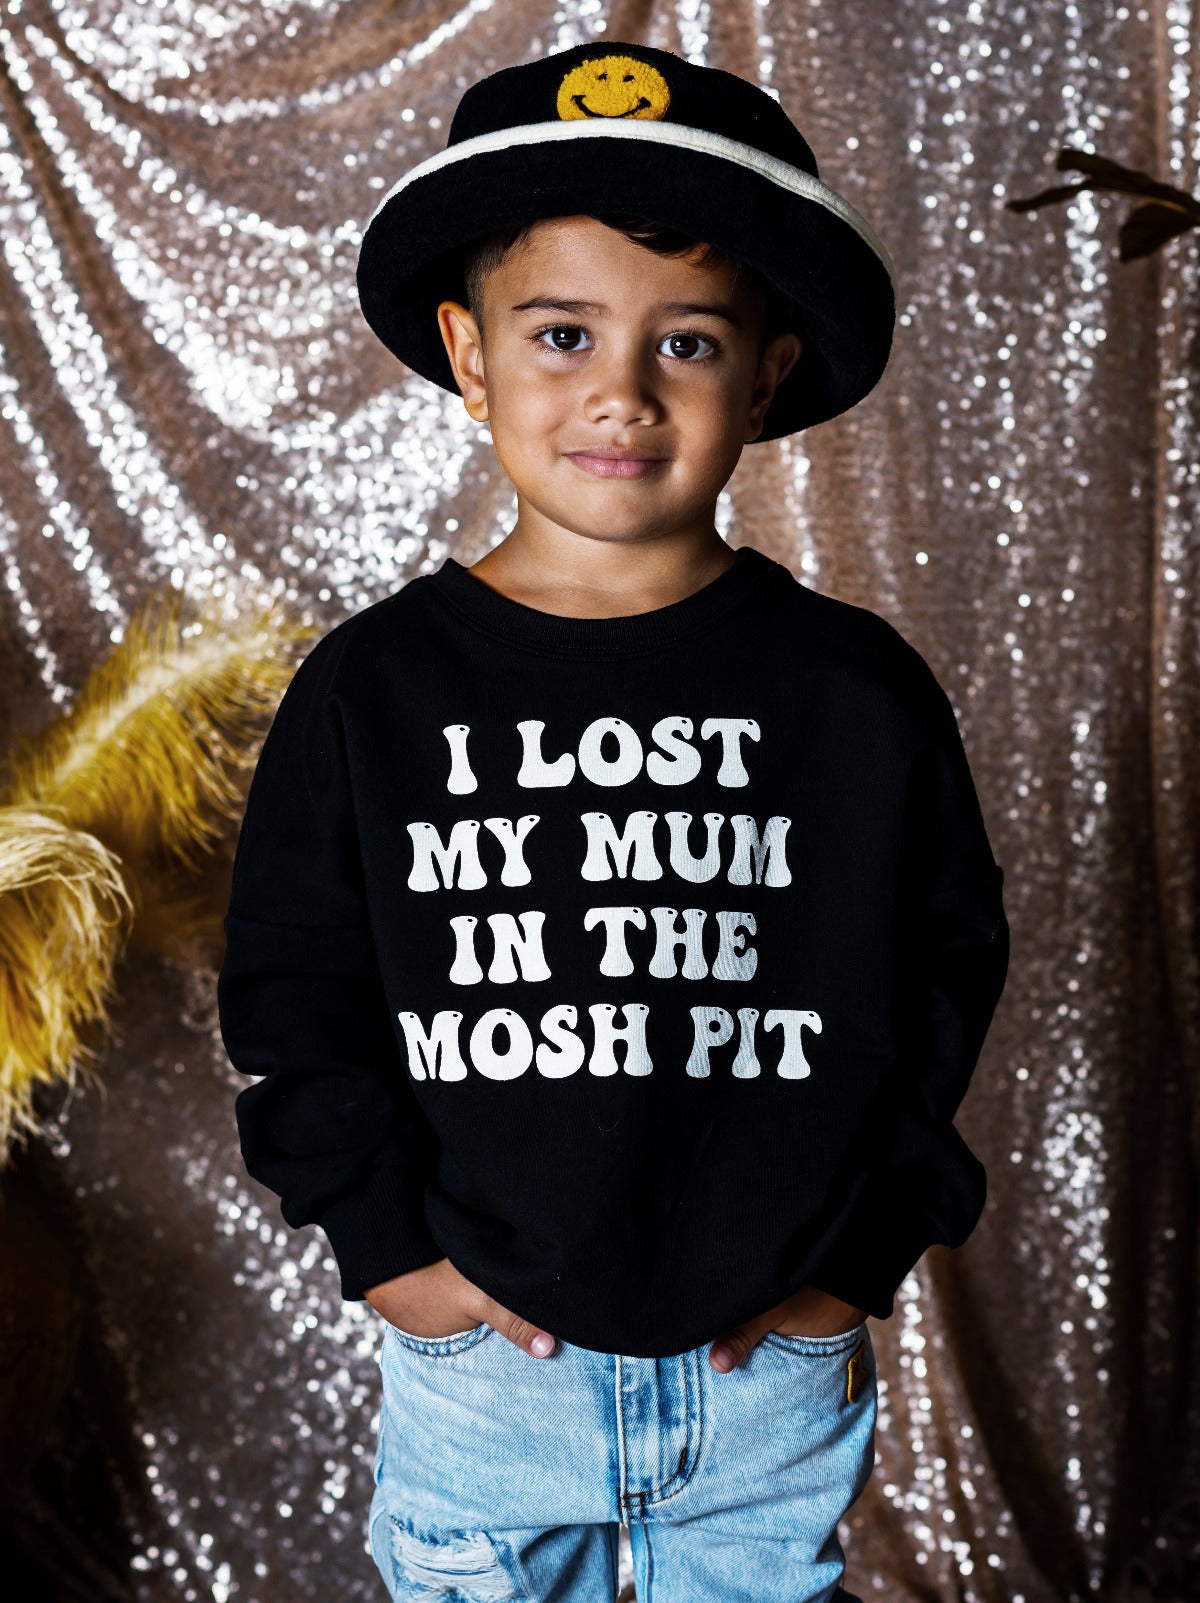 EXCLUSIVE Black Mosh Pit Sweatshirt - Charcoal Jumper Rock Your Baby 